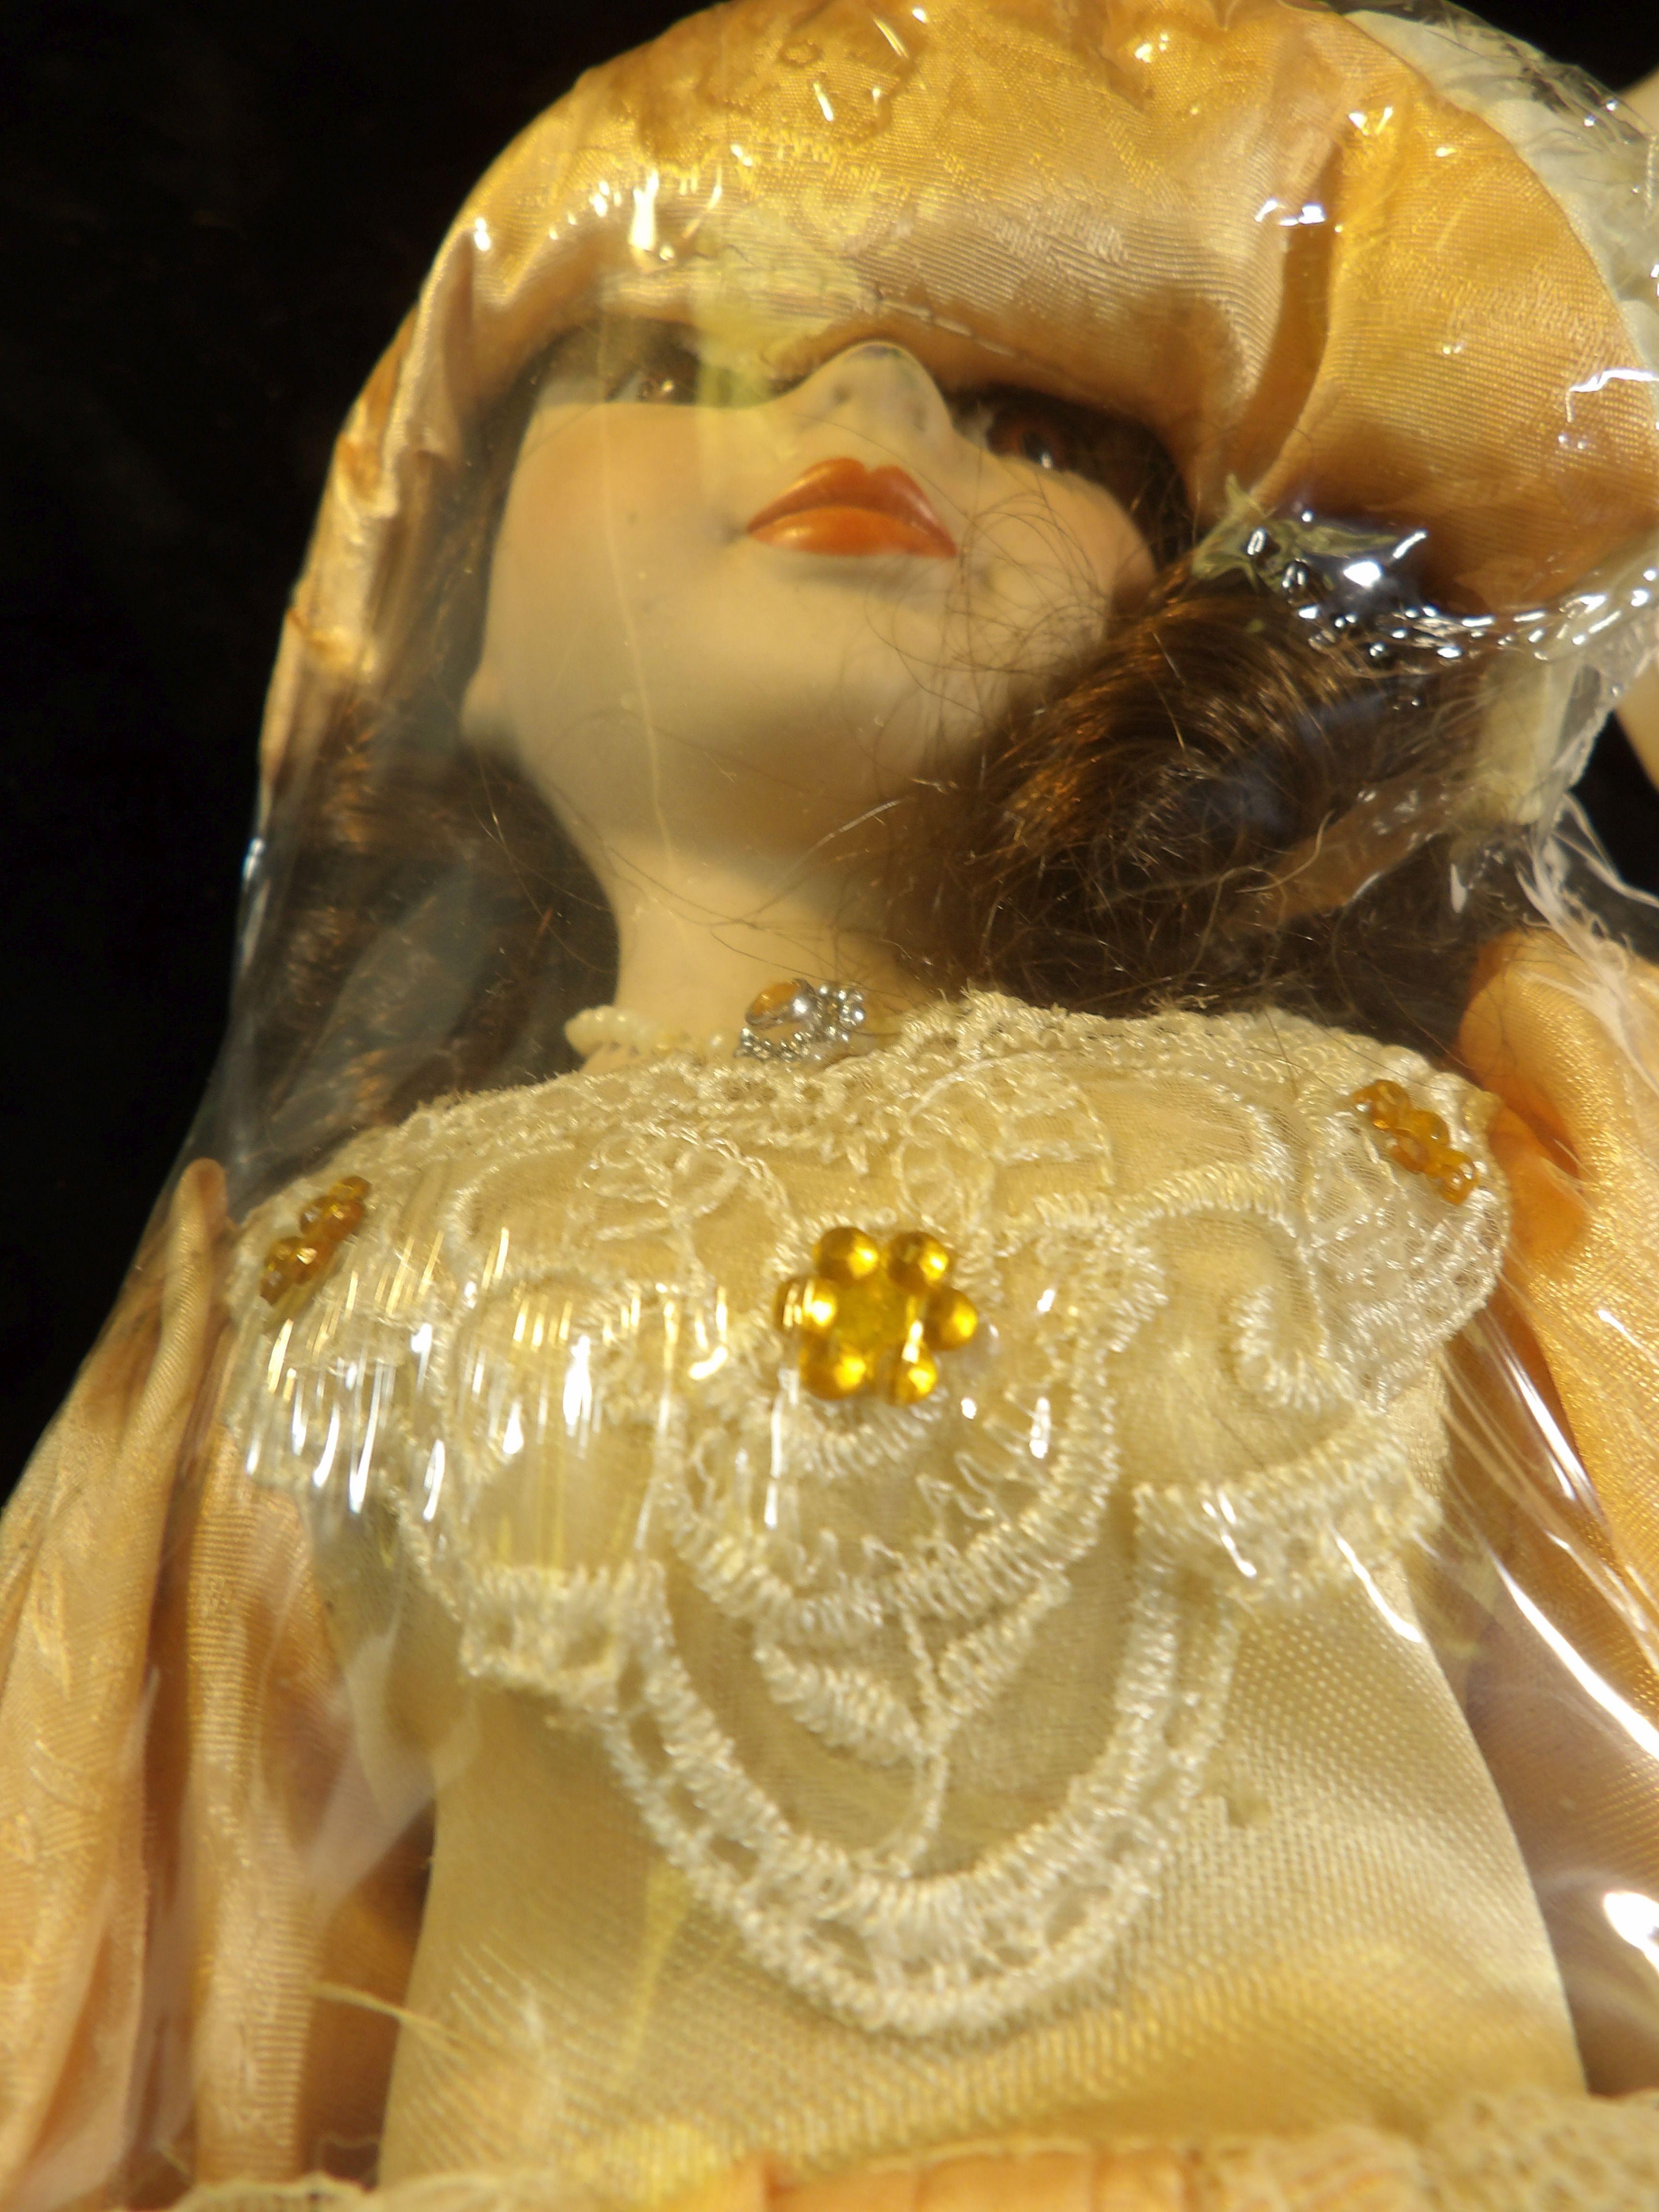 Brunette Doll 16" dressed in an elegant laced dress.